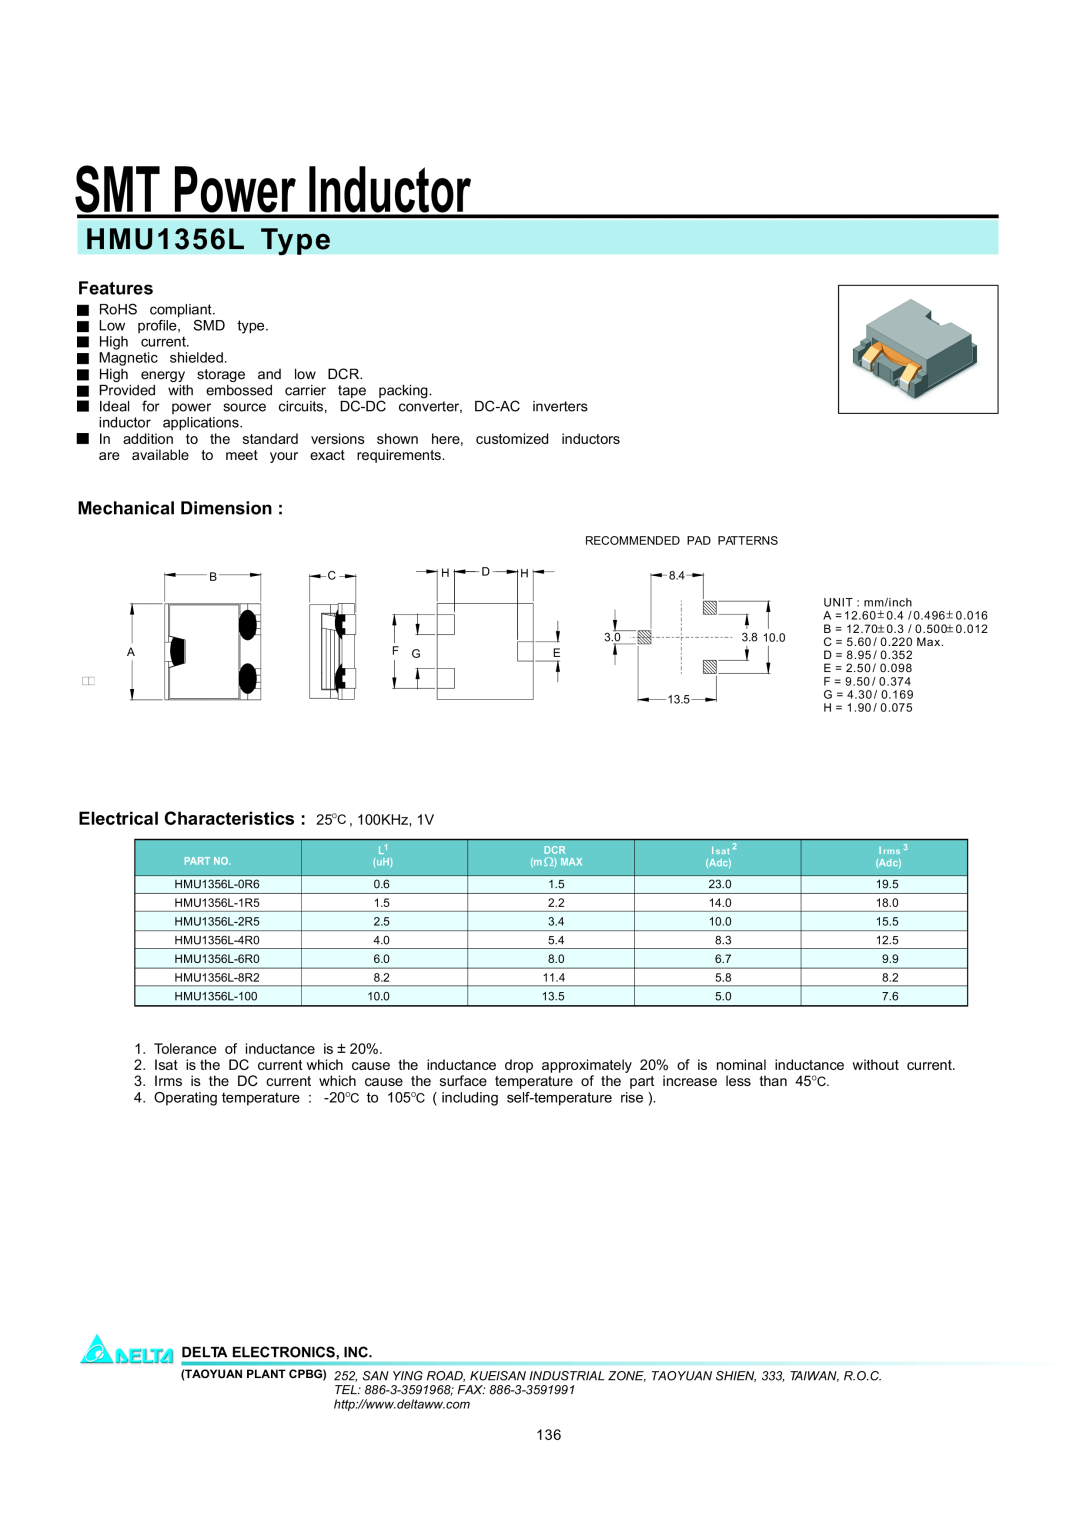 Delta Electronics manual SMT Power Inductor, HMU1356L Type, Features, Mechanical Dimension, Delta Electronics, Inc 